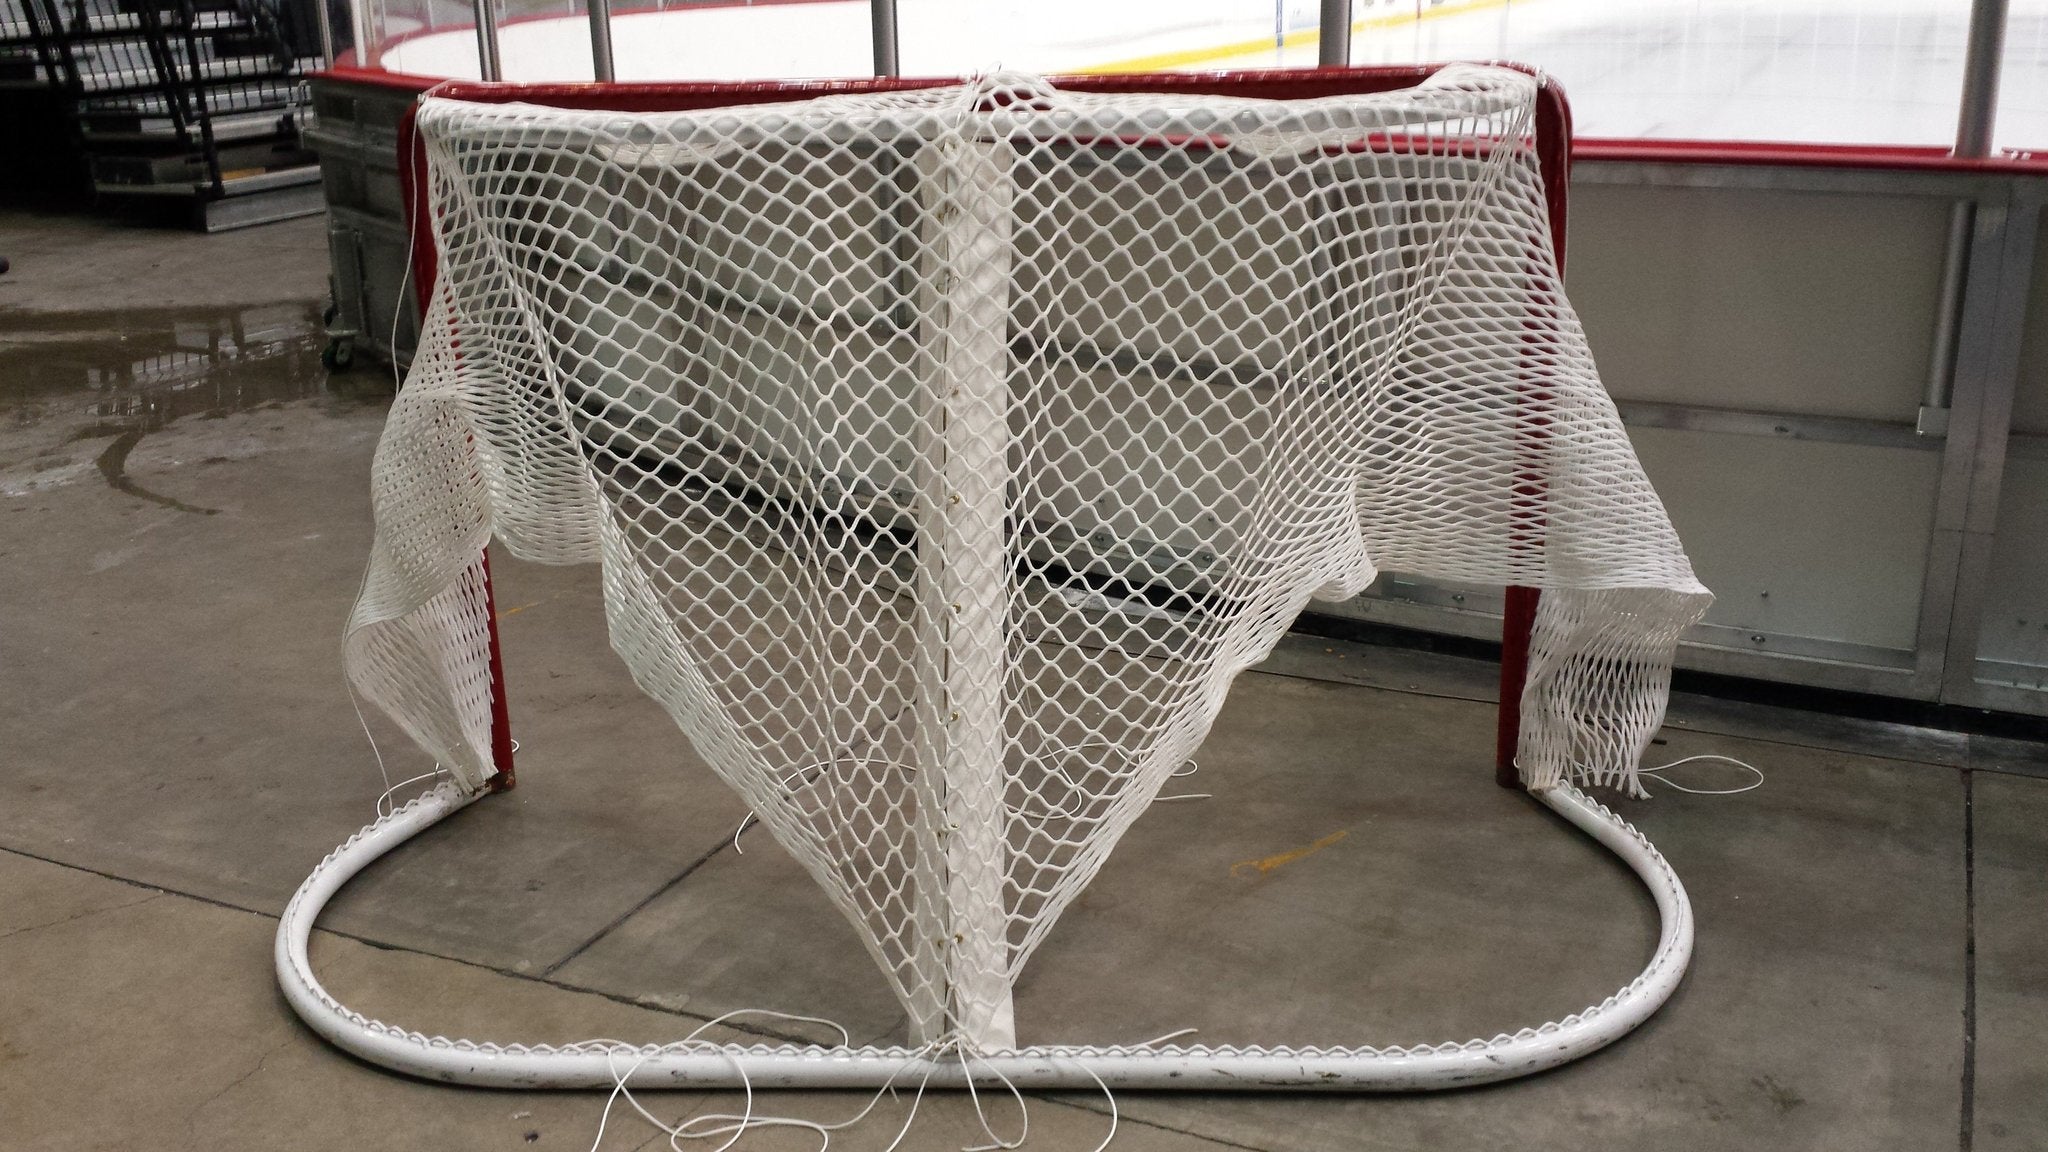 Nhl Regulation Ice Hockey Goal 6x4 Arizona Sports Equipment